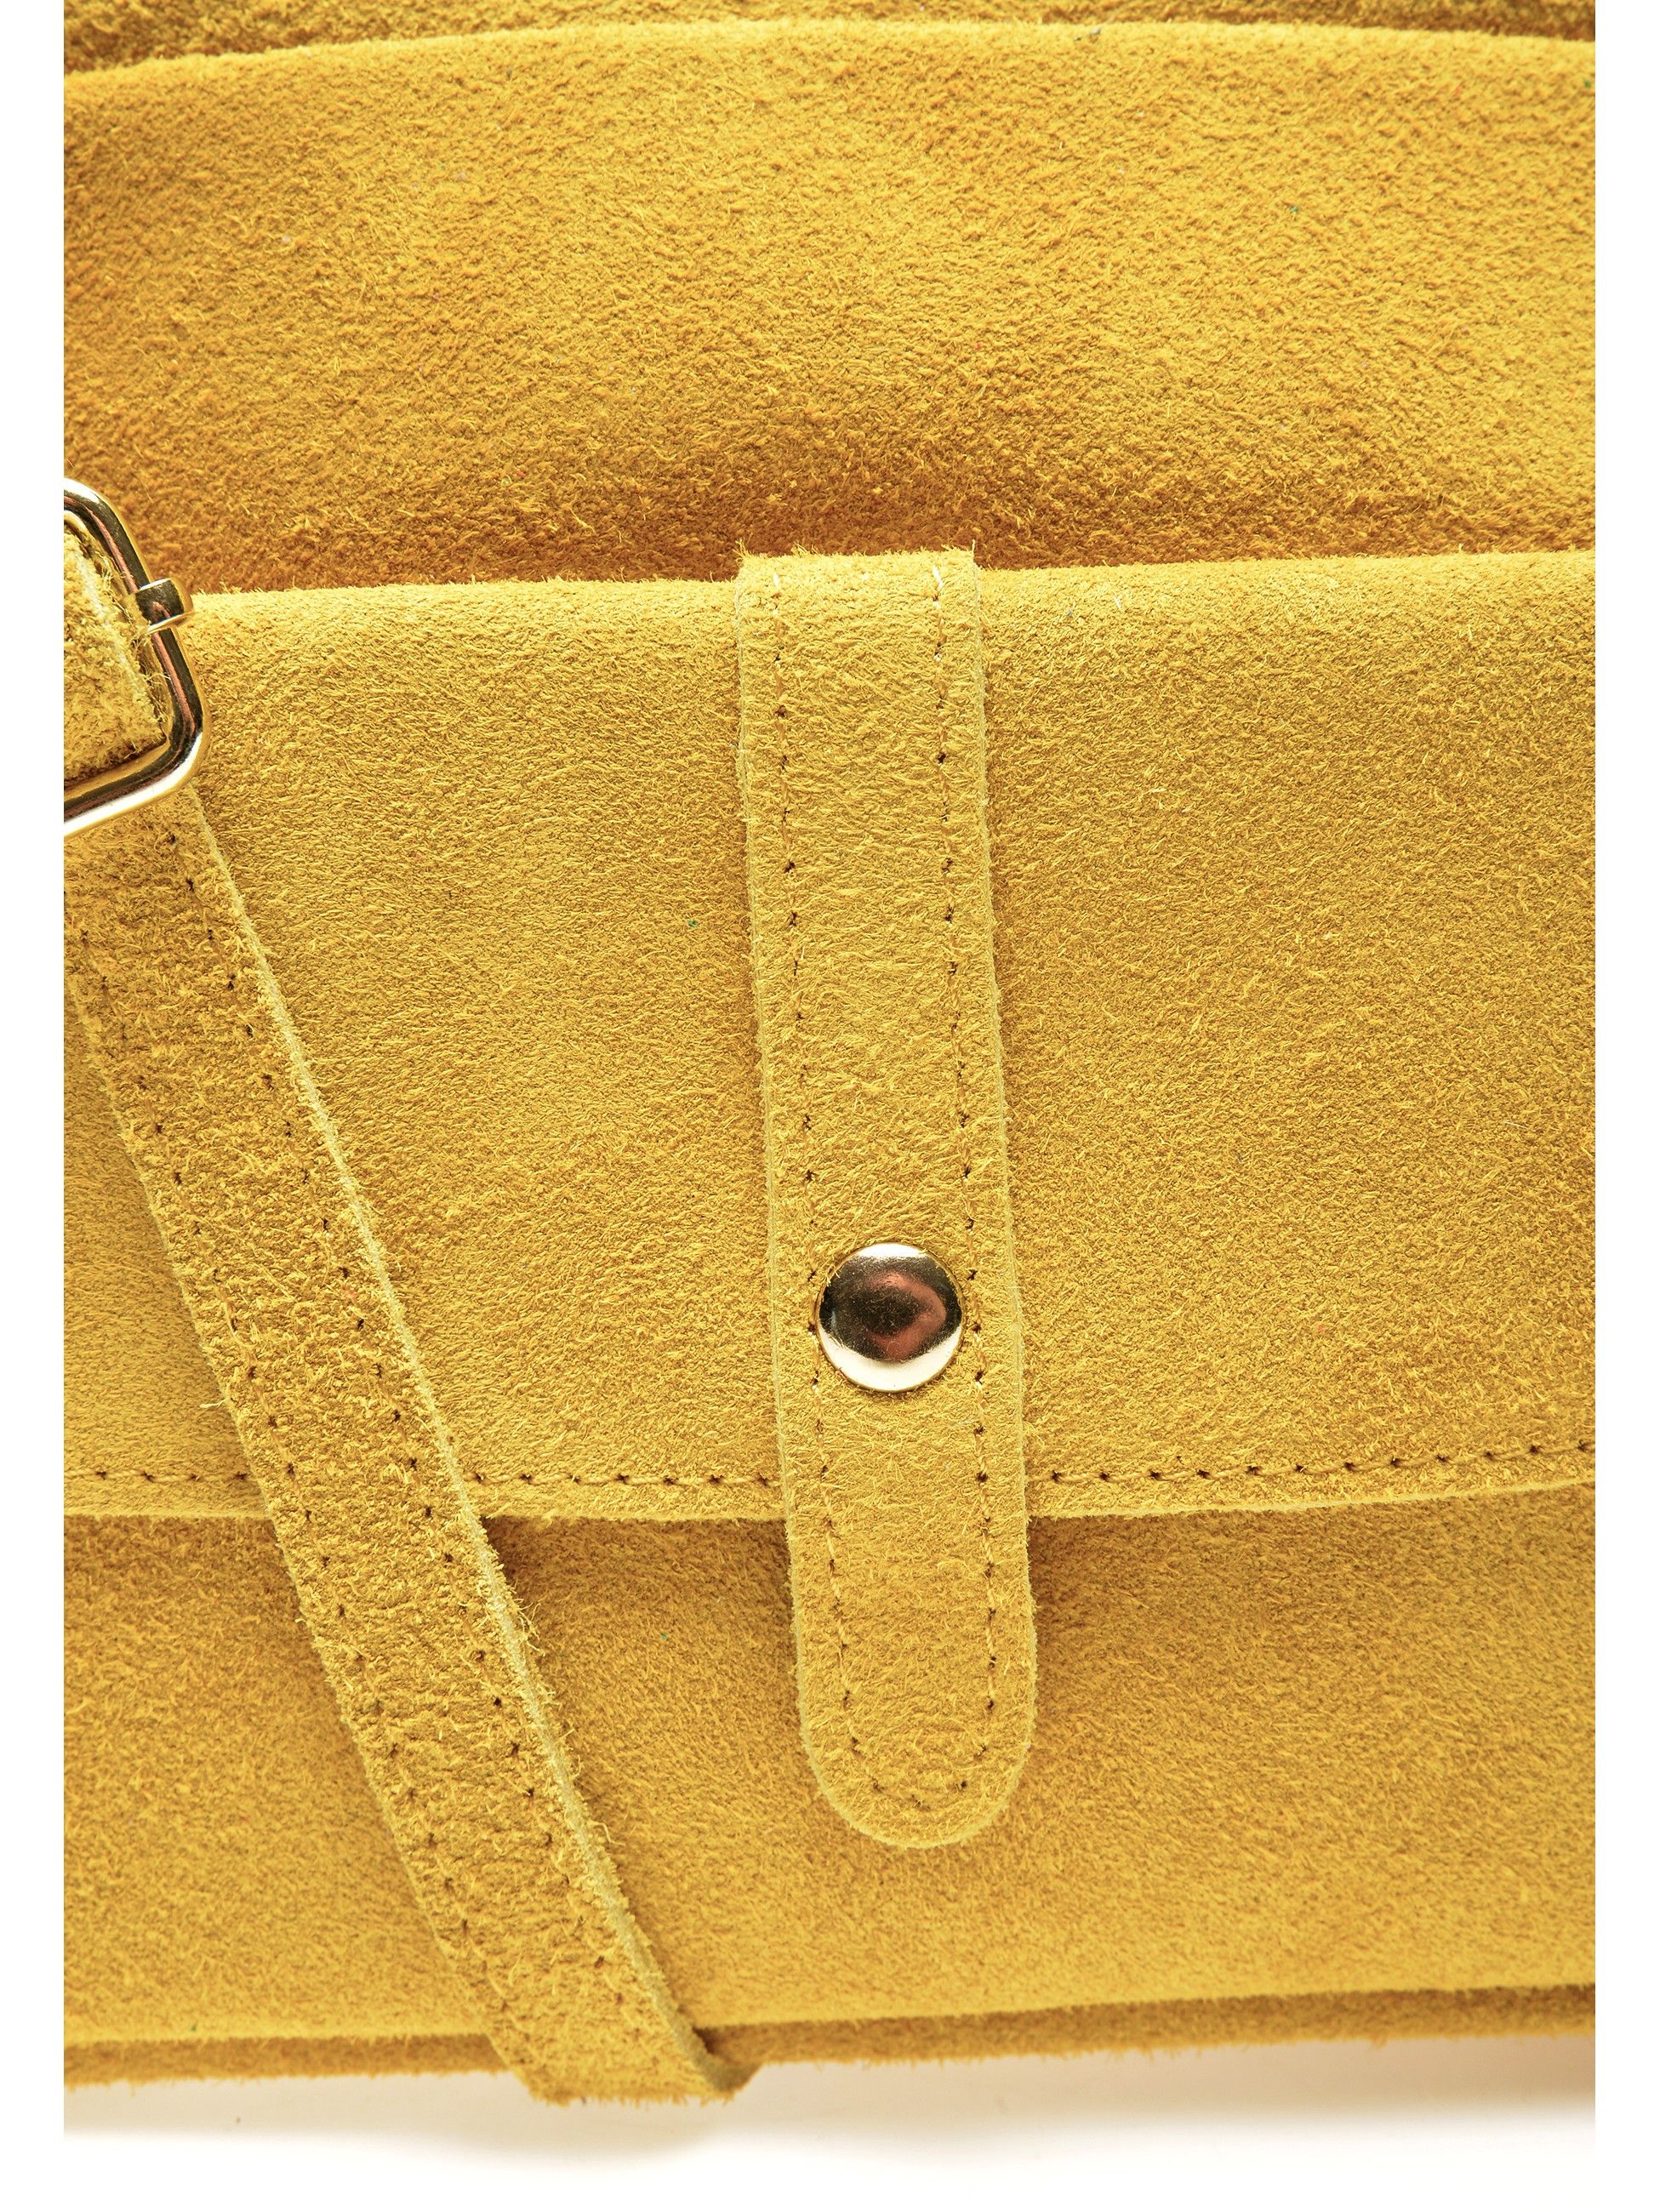 Shoulder bag
100% suede
Top zip closure
Inner zip pocket
Front button pocket
Dimensions (L): 19x24x9 cm
Handle: /
Shoulder strap: 120 cm adjustable